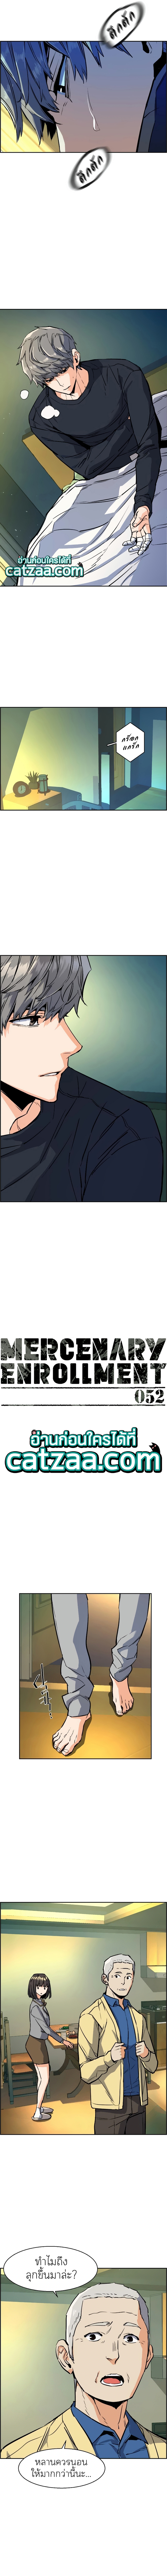 Mercenary Enrollment 52 (3)